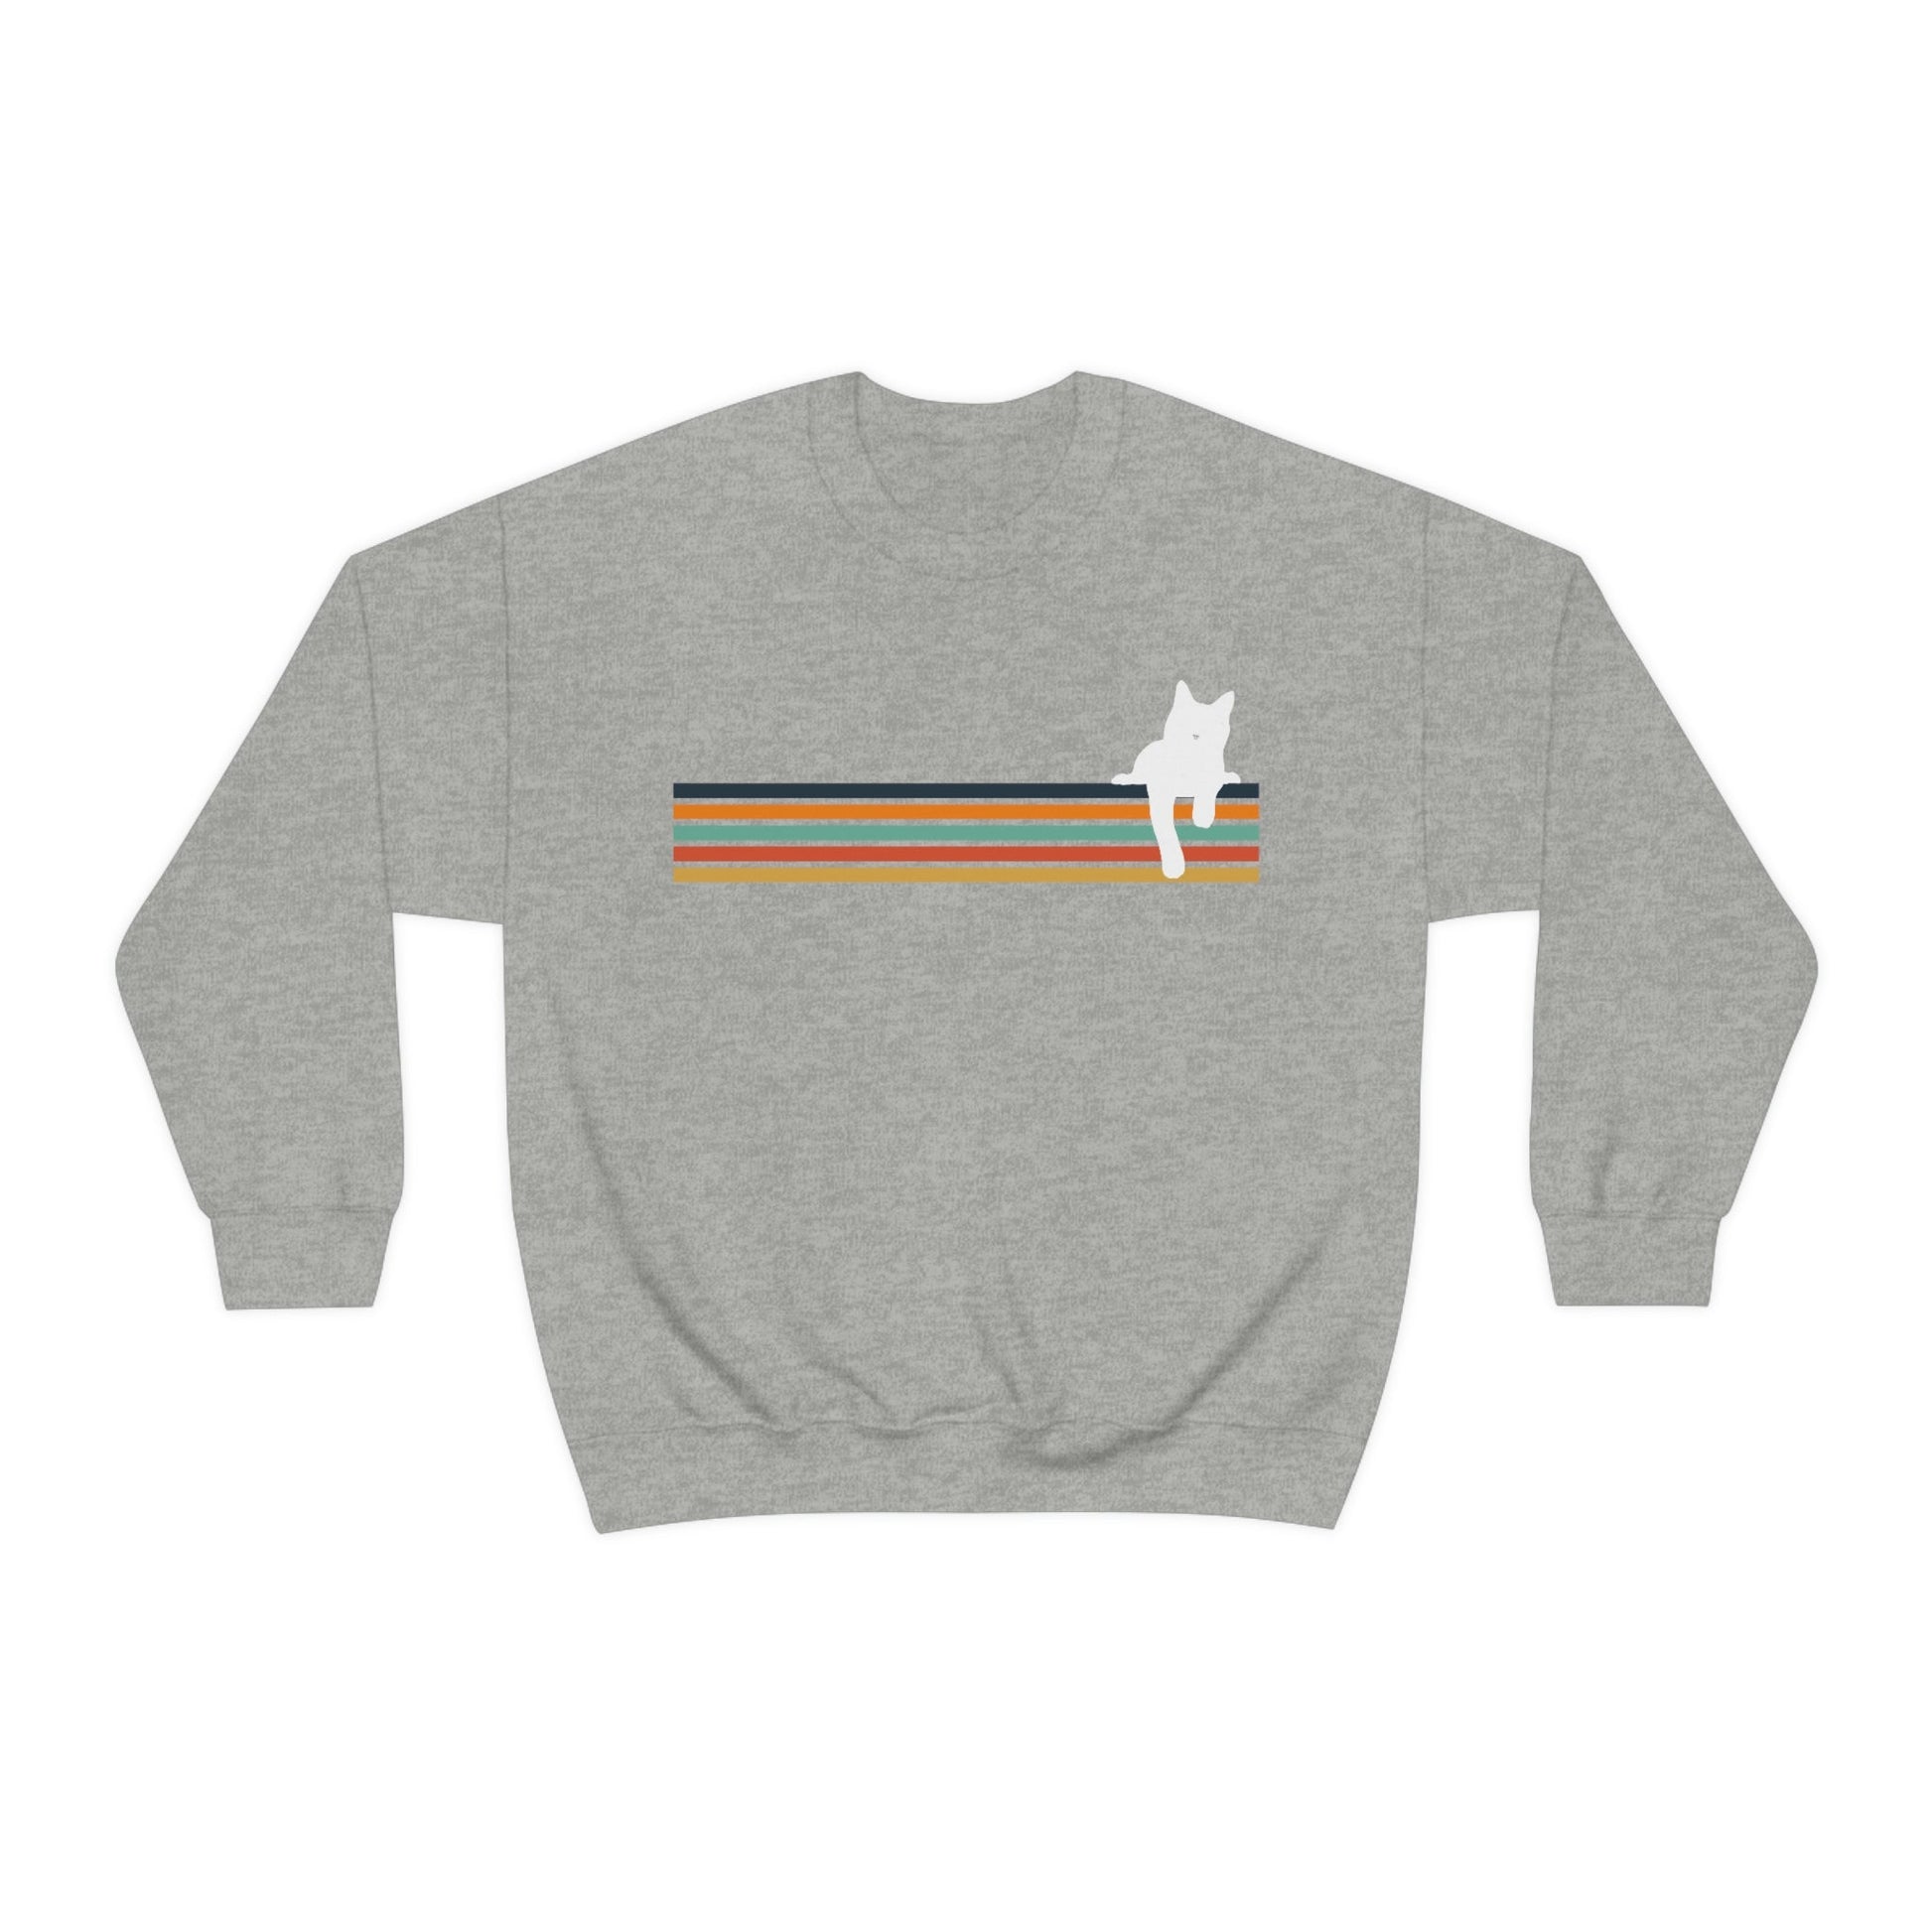 Rainbow Cat | Crewneck Sweatshirt - Detezi Designs-20133200645222584707